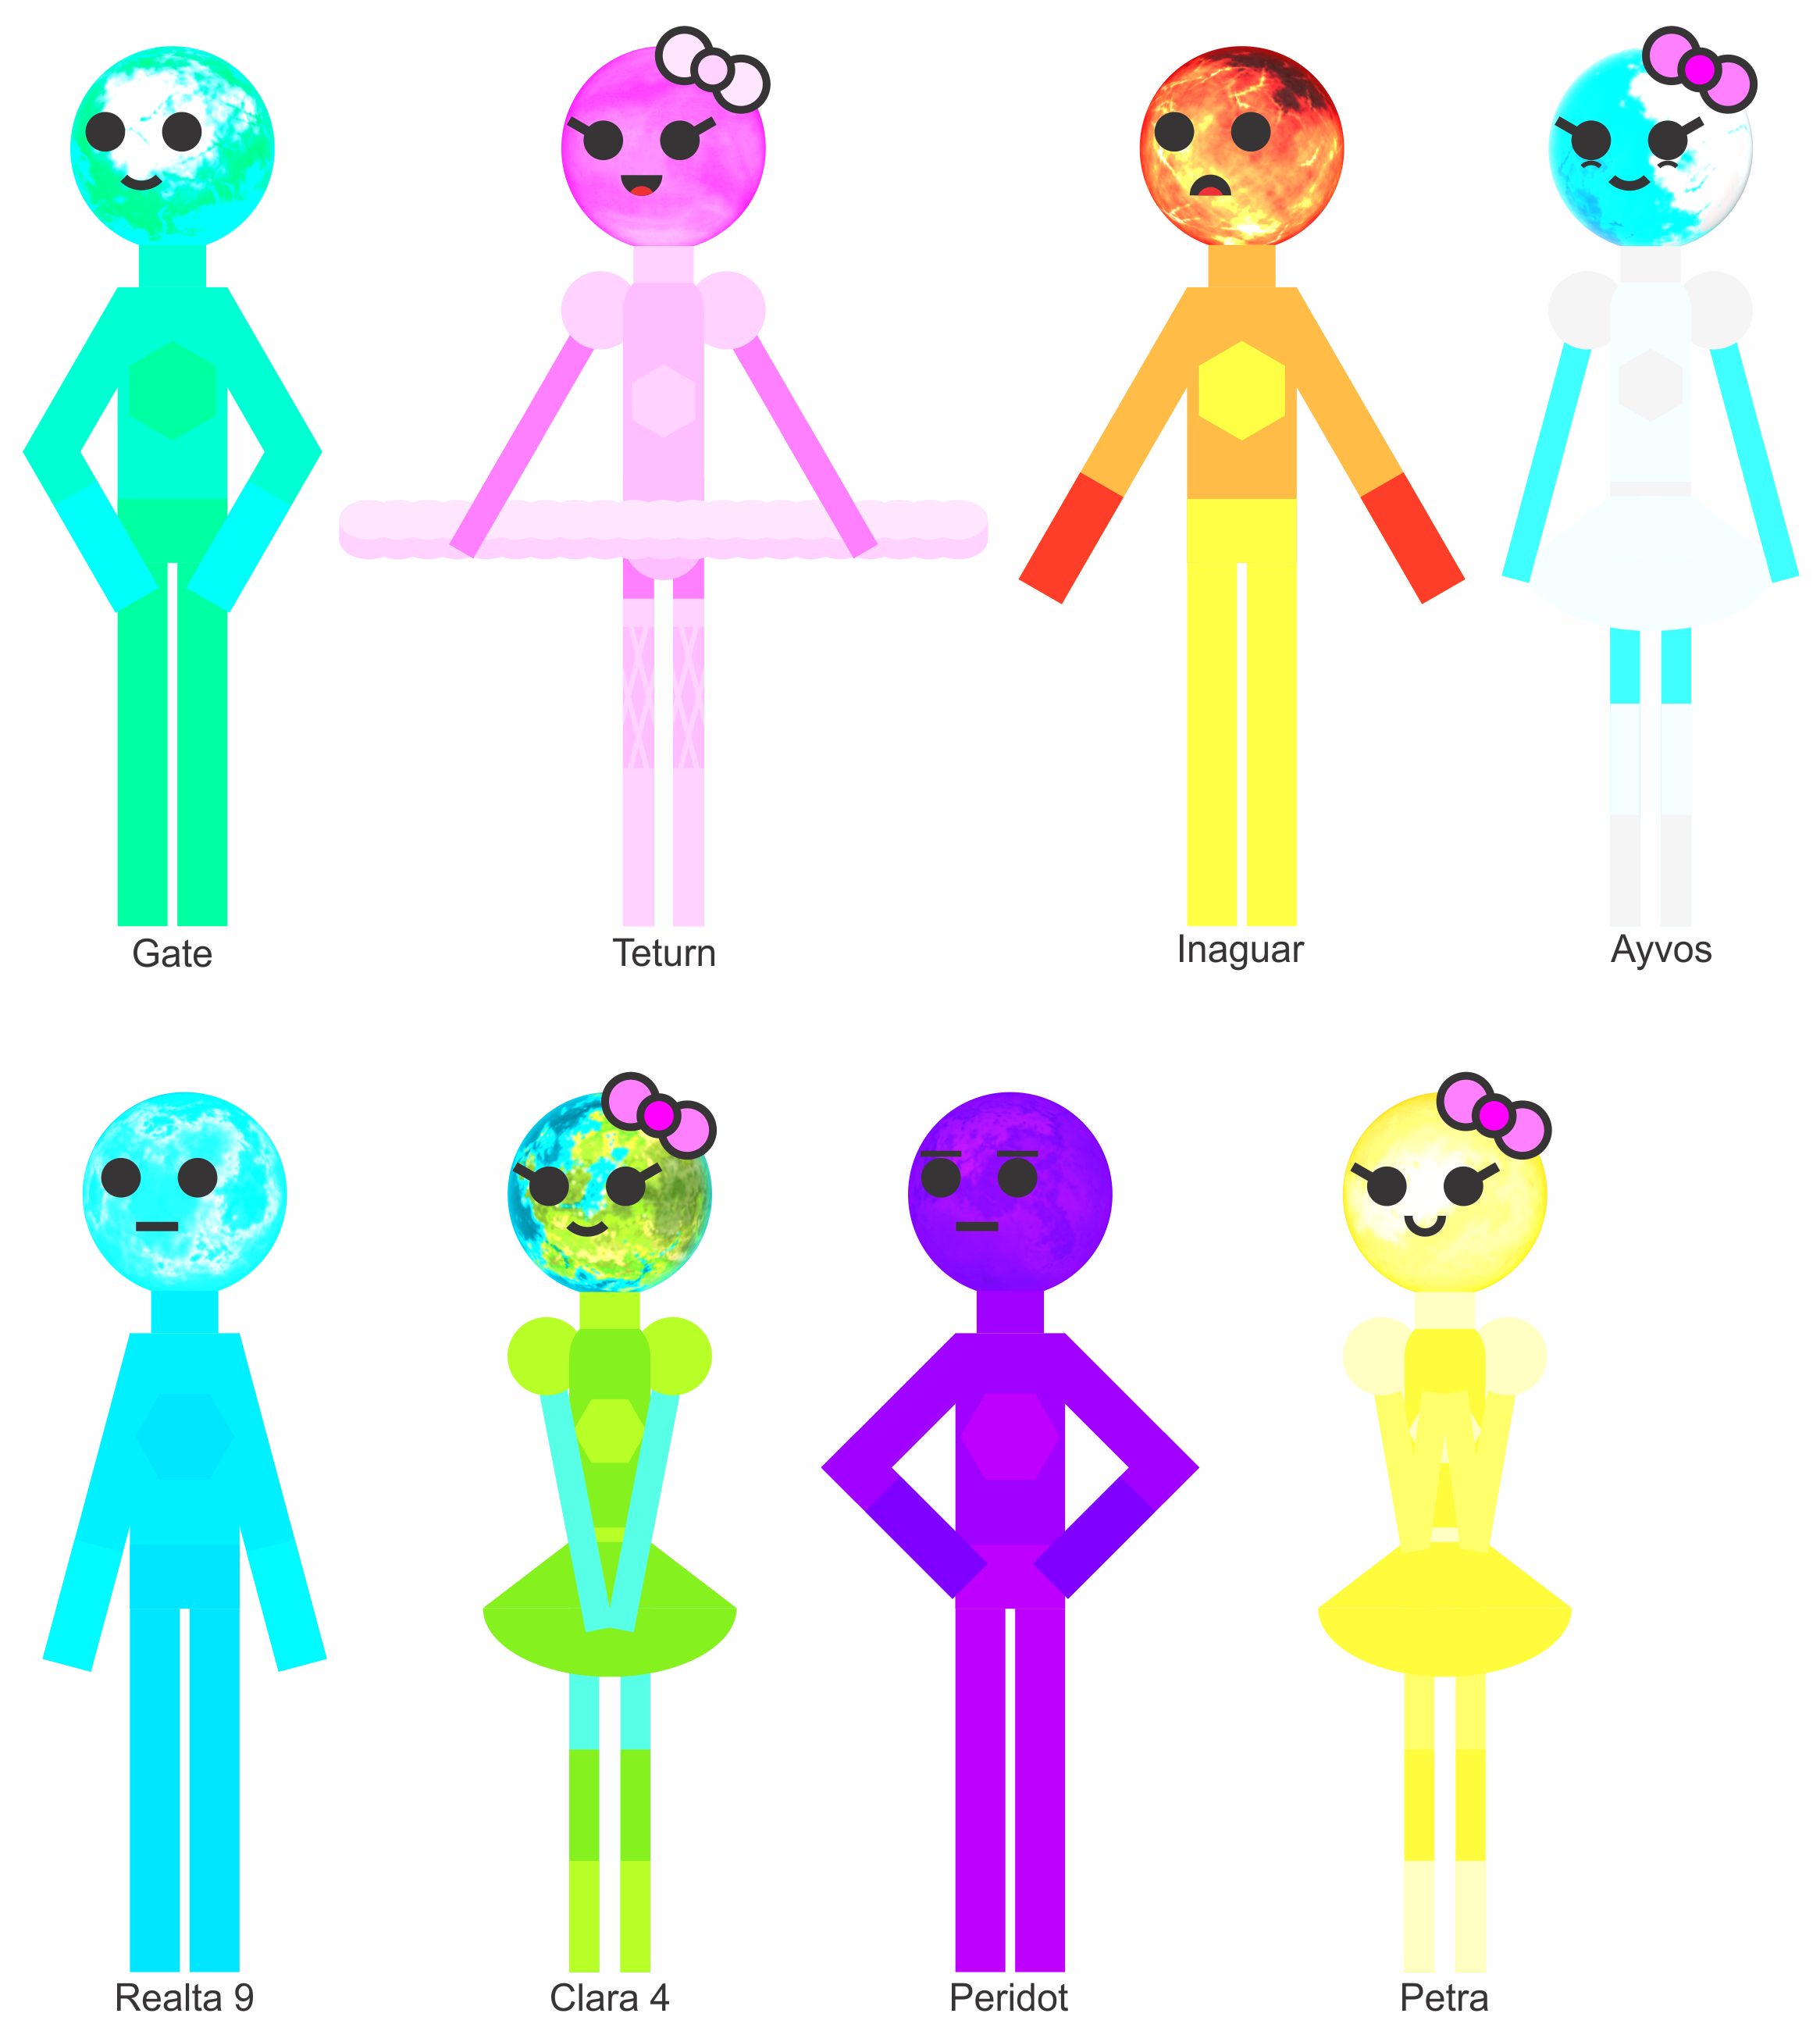 Doors Characters Comparison by jordanli04 on DeviantArt